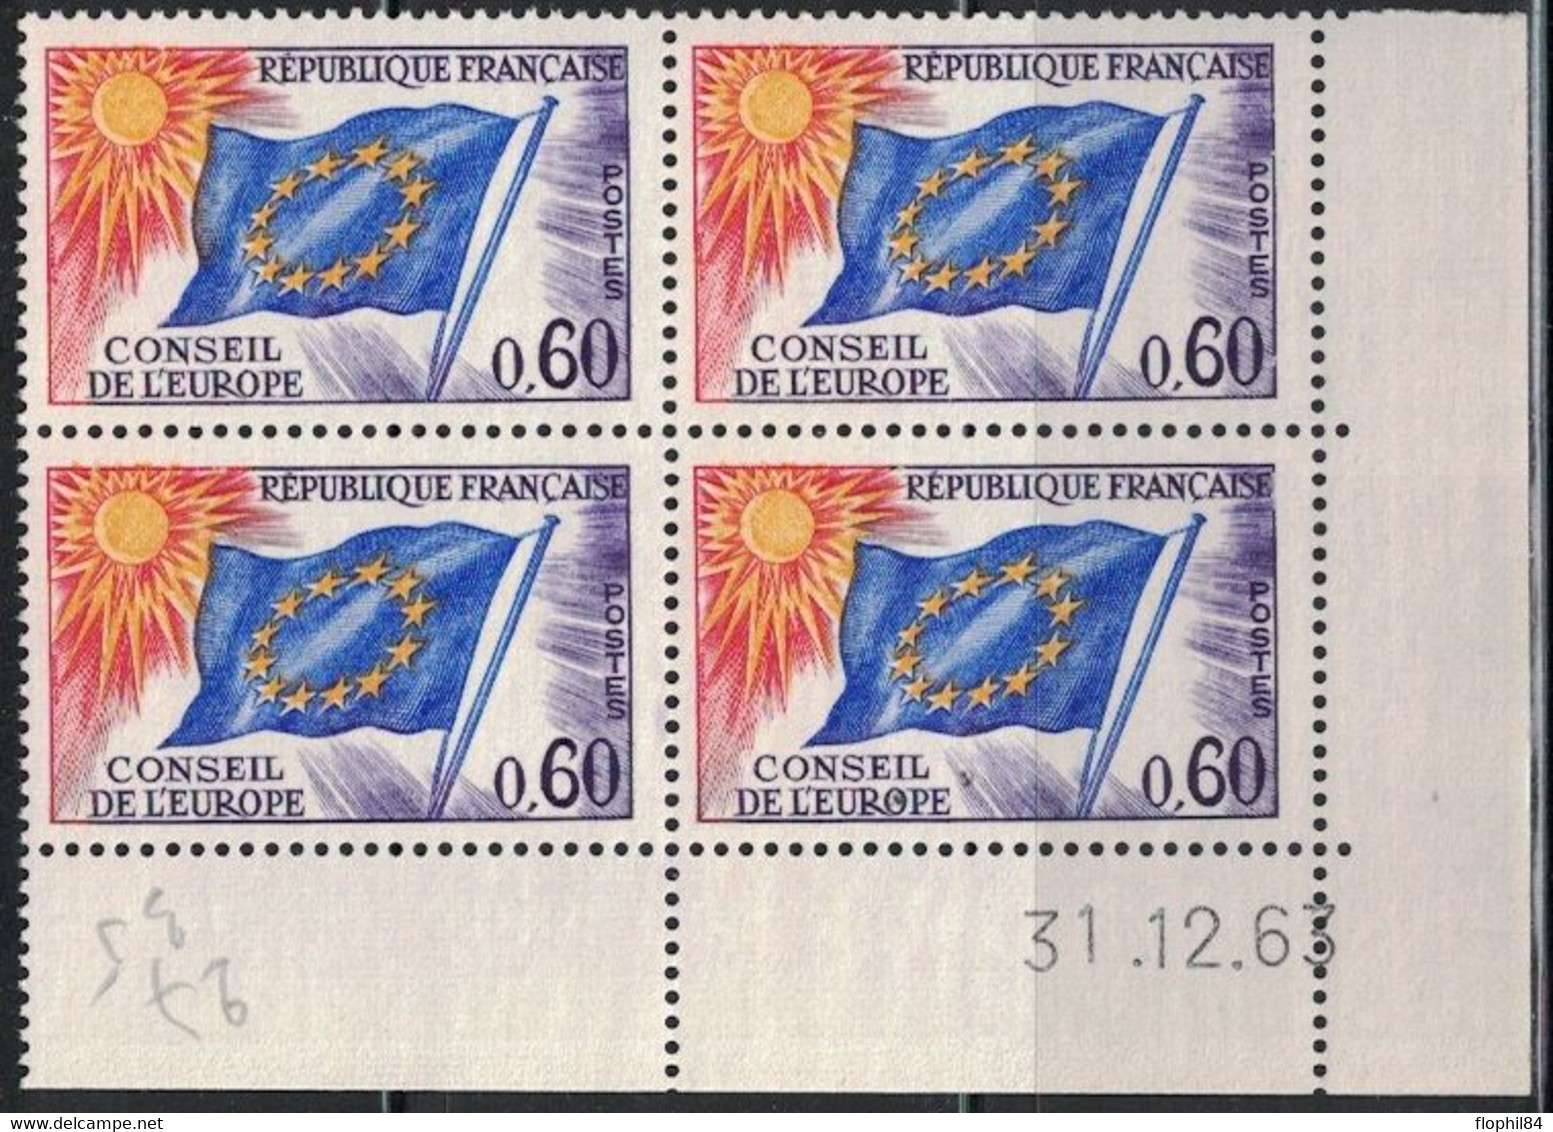 COIN DATE - SERVICE N°34 - 0f60 - CONSEIL DE L'EUROPE - 31-12-1963 - Cote 7€50. - Officials